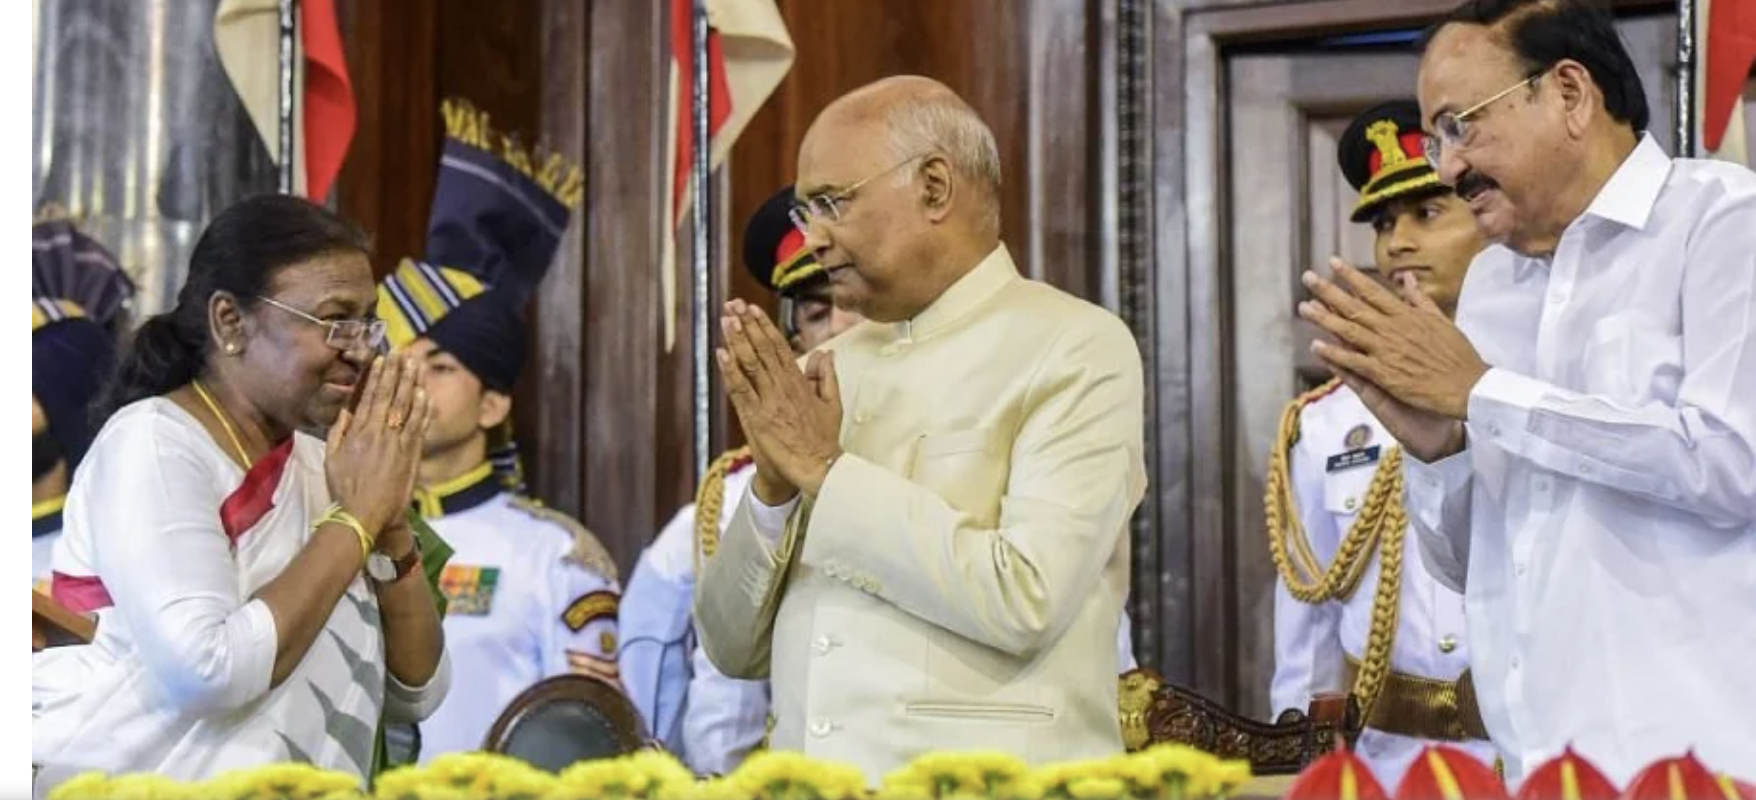 India's 15h President Mumru sworn-in